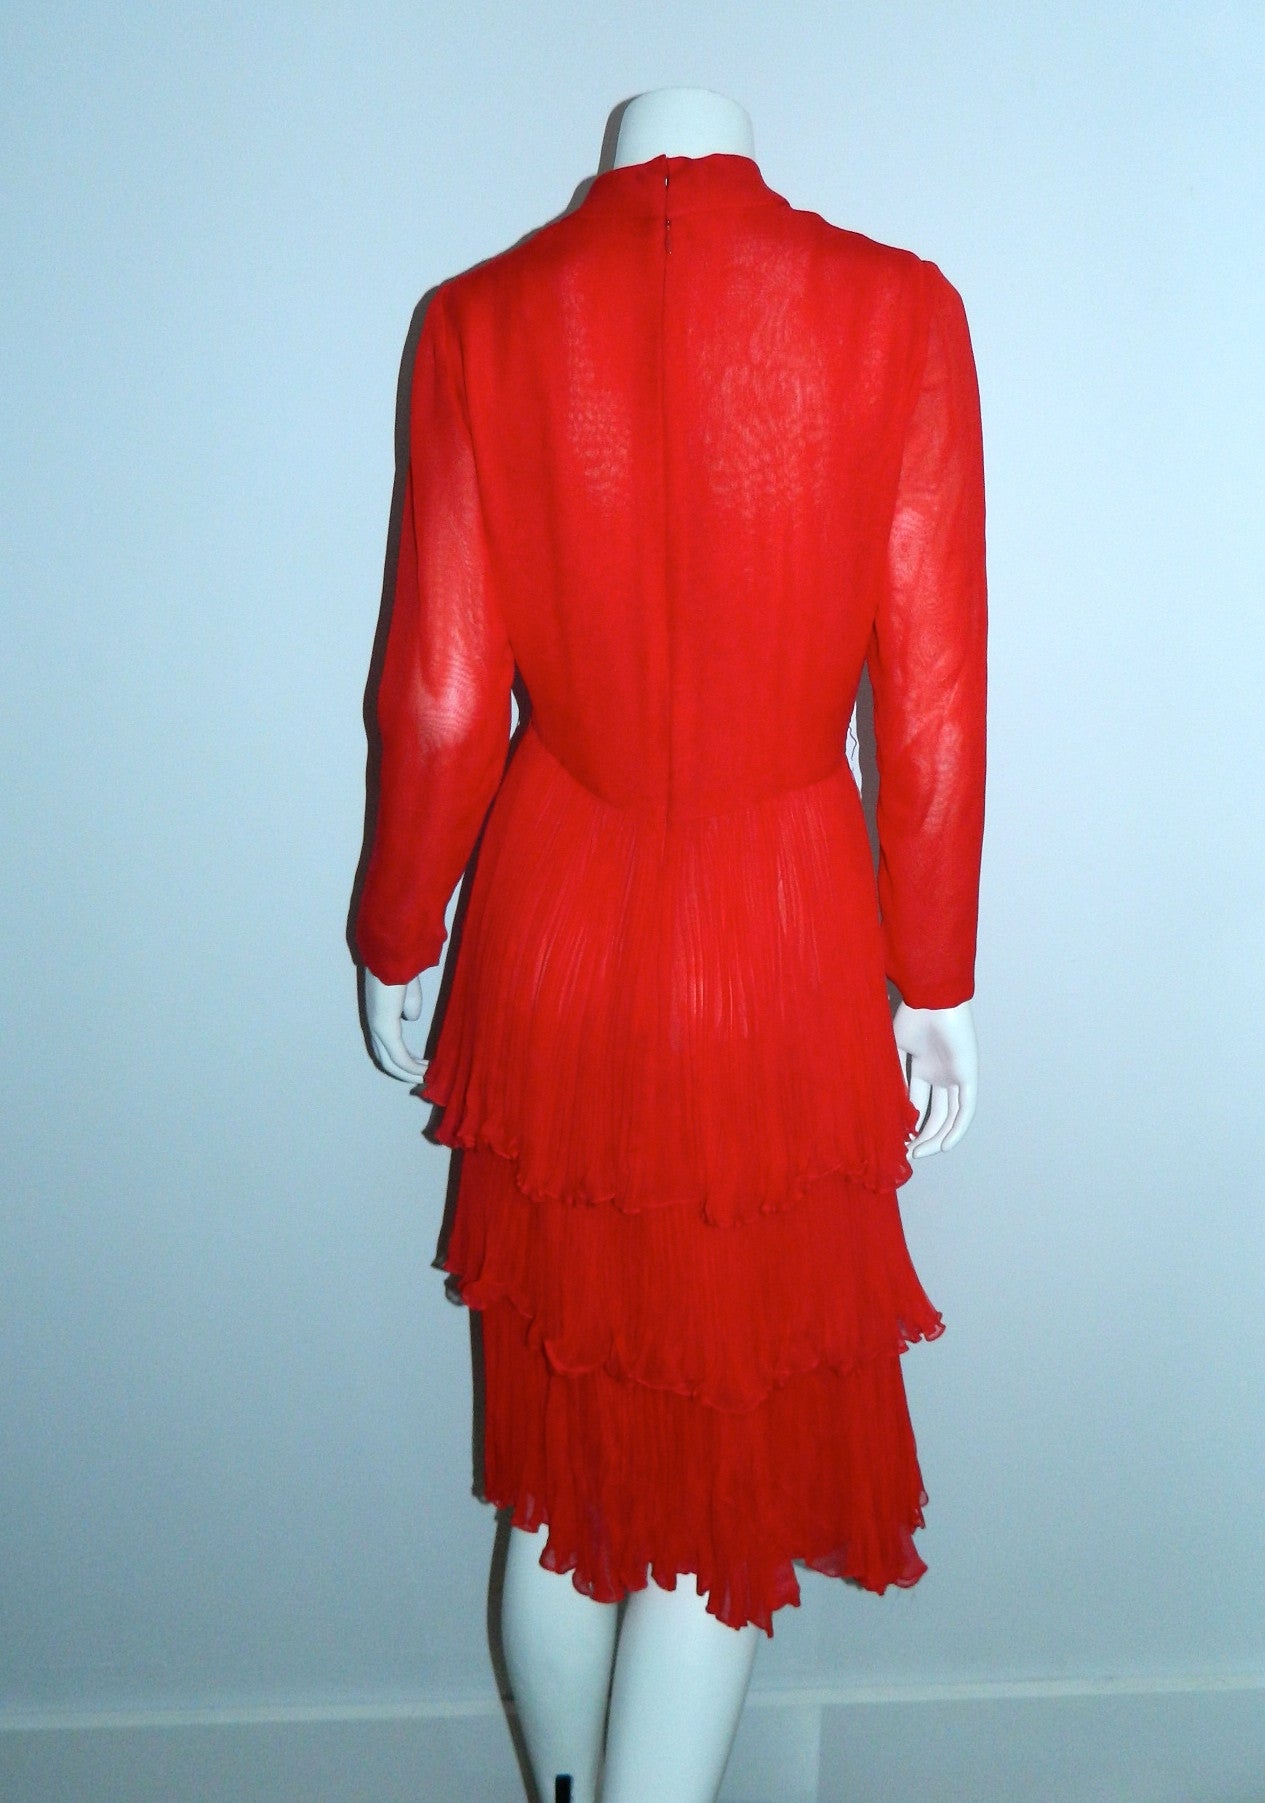 red silk chiffon John Anthony dress / 1970s vintage / tiered skirt / bow neck XS - S